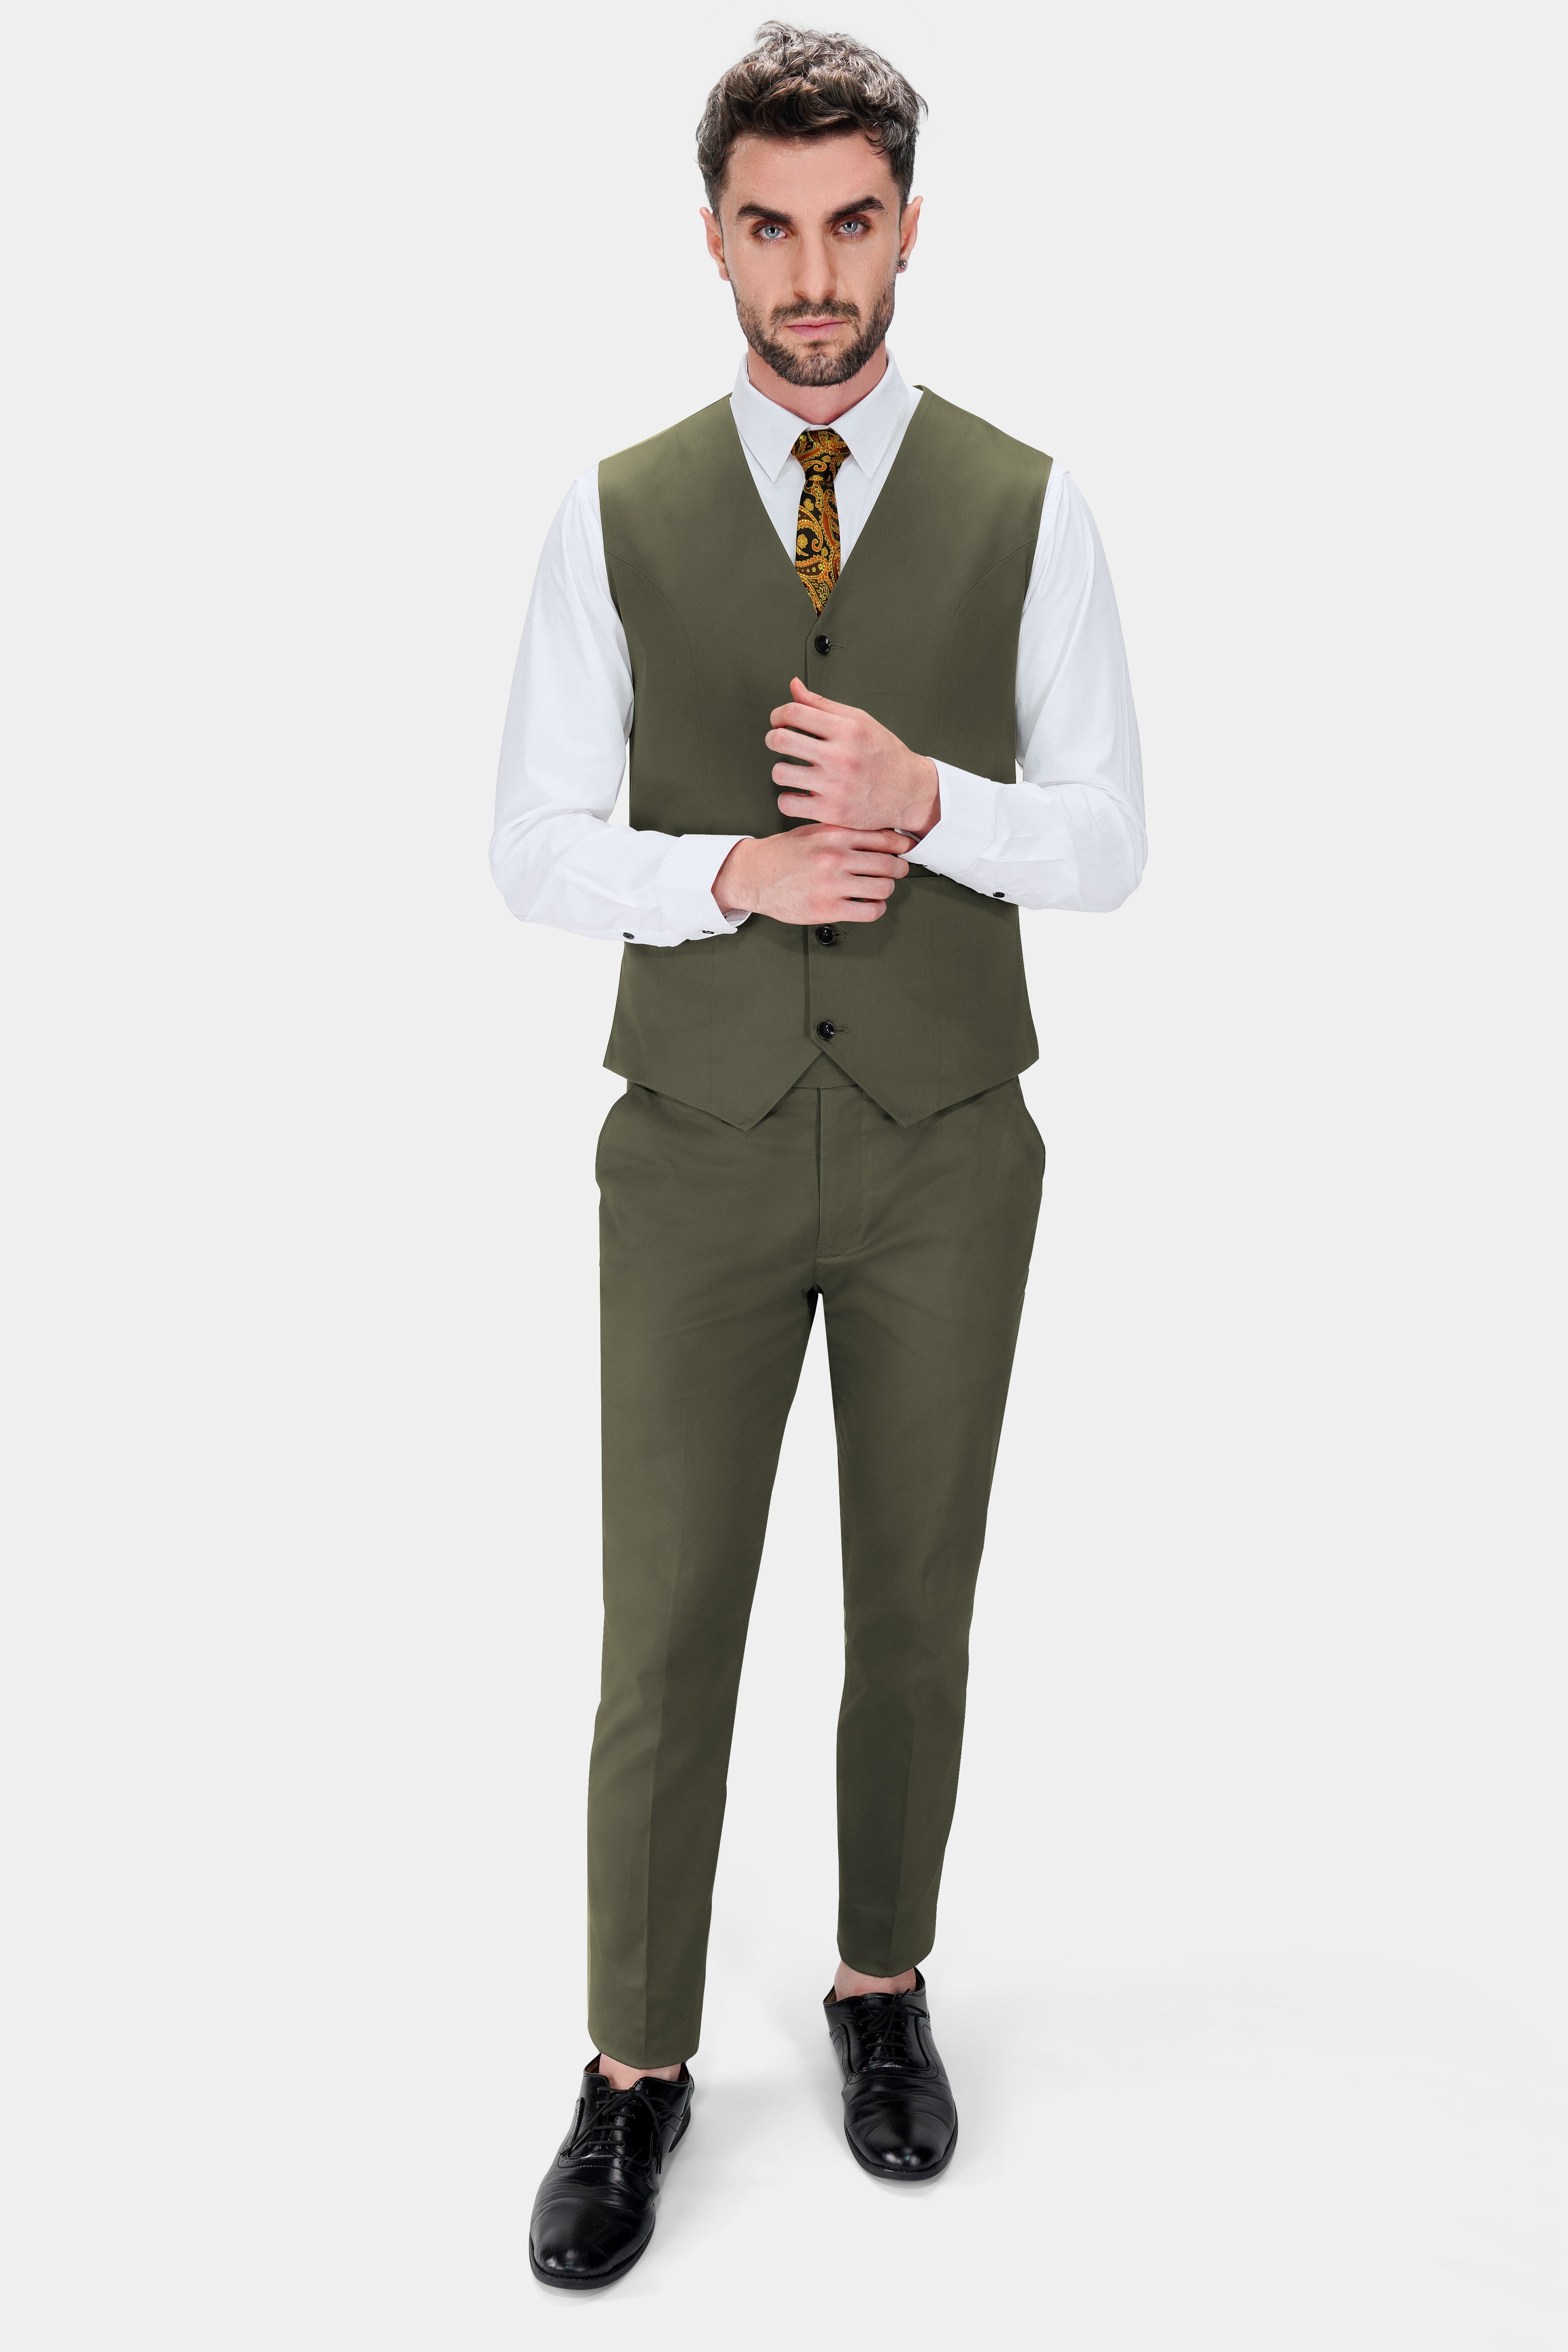 Hemlock Green Premium Cotton Stretchable Traveler Waistcoat V2783-36, V2783-38, V2783-40, V2783-42, V2783-44, V2783-46, V2783-48, V2783-50, V2783-52, V2783-54, V2783-56, V2783-58, V2783-60